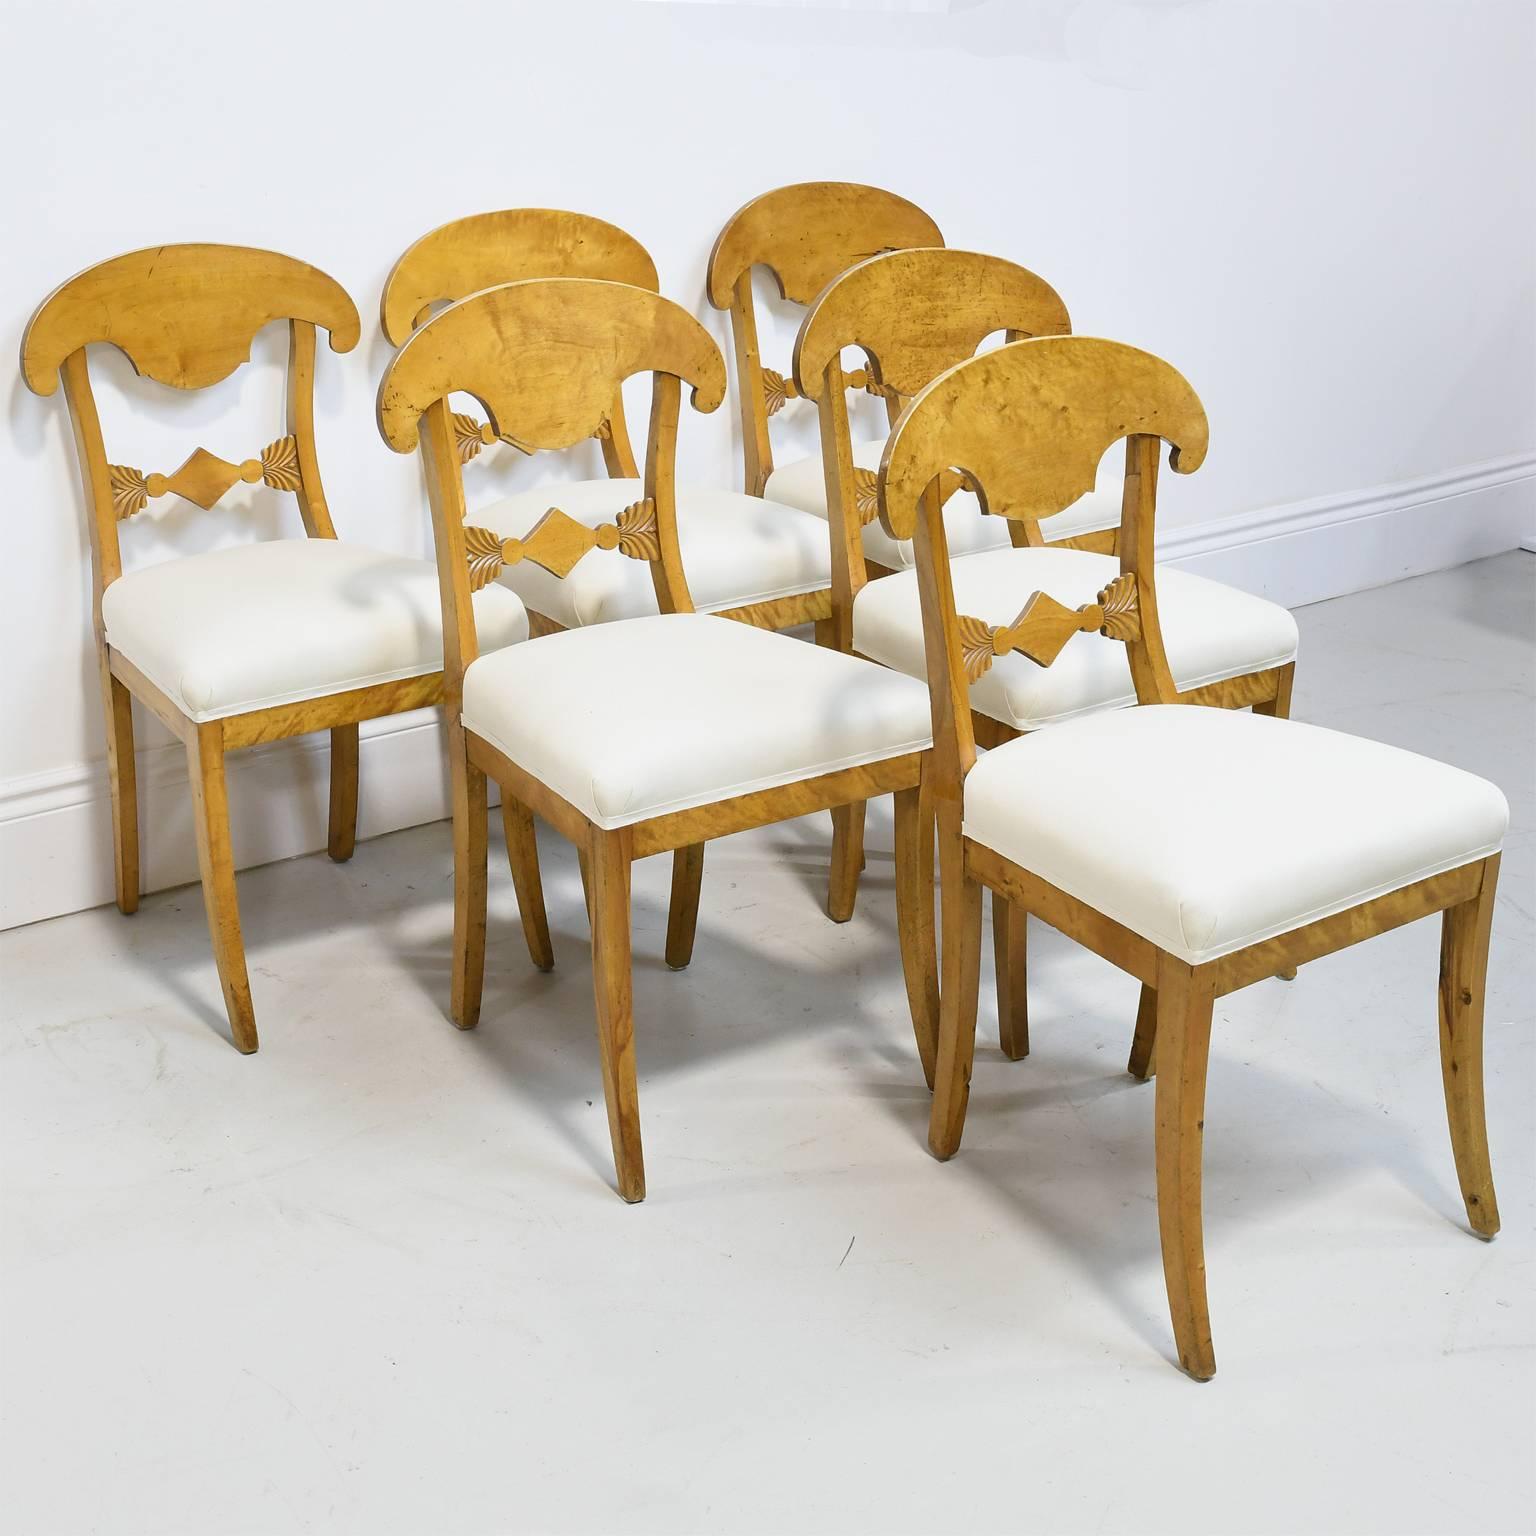 Polished Set of Six Swedish Biedermeier Chairs with Upholstered Seats, circa 1820